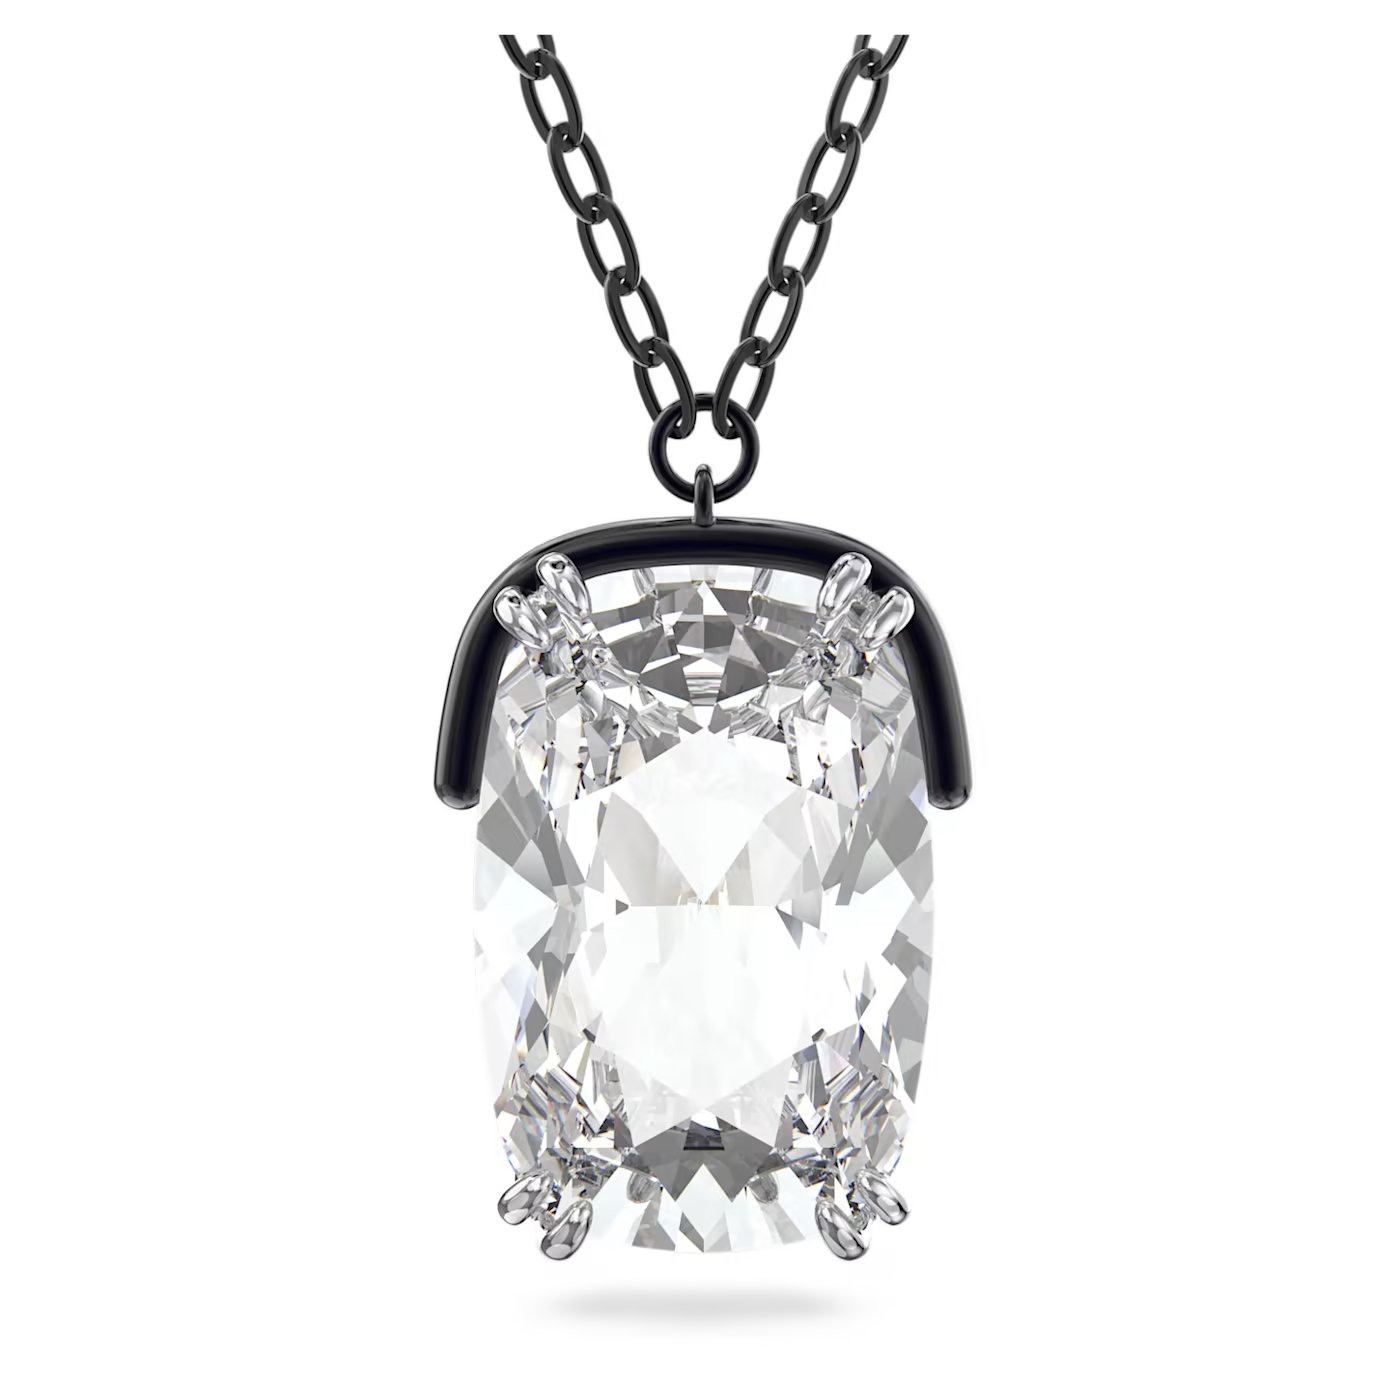 62f26d762f0b0_px-harmonia-pendant--oversized-crystal--white--mixed-metal-finish-swarovski-5600042.jpg